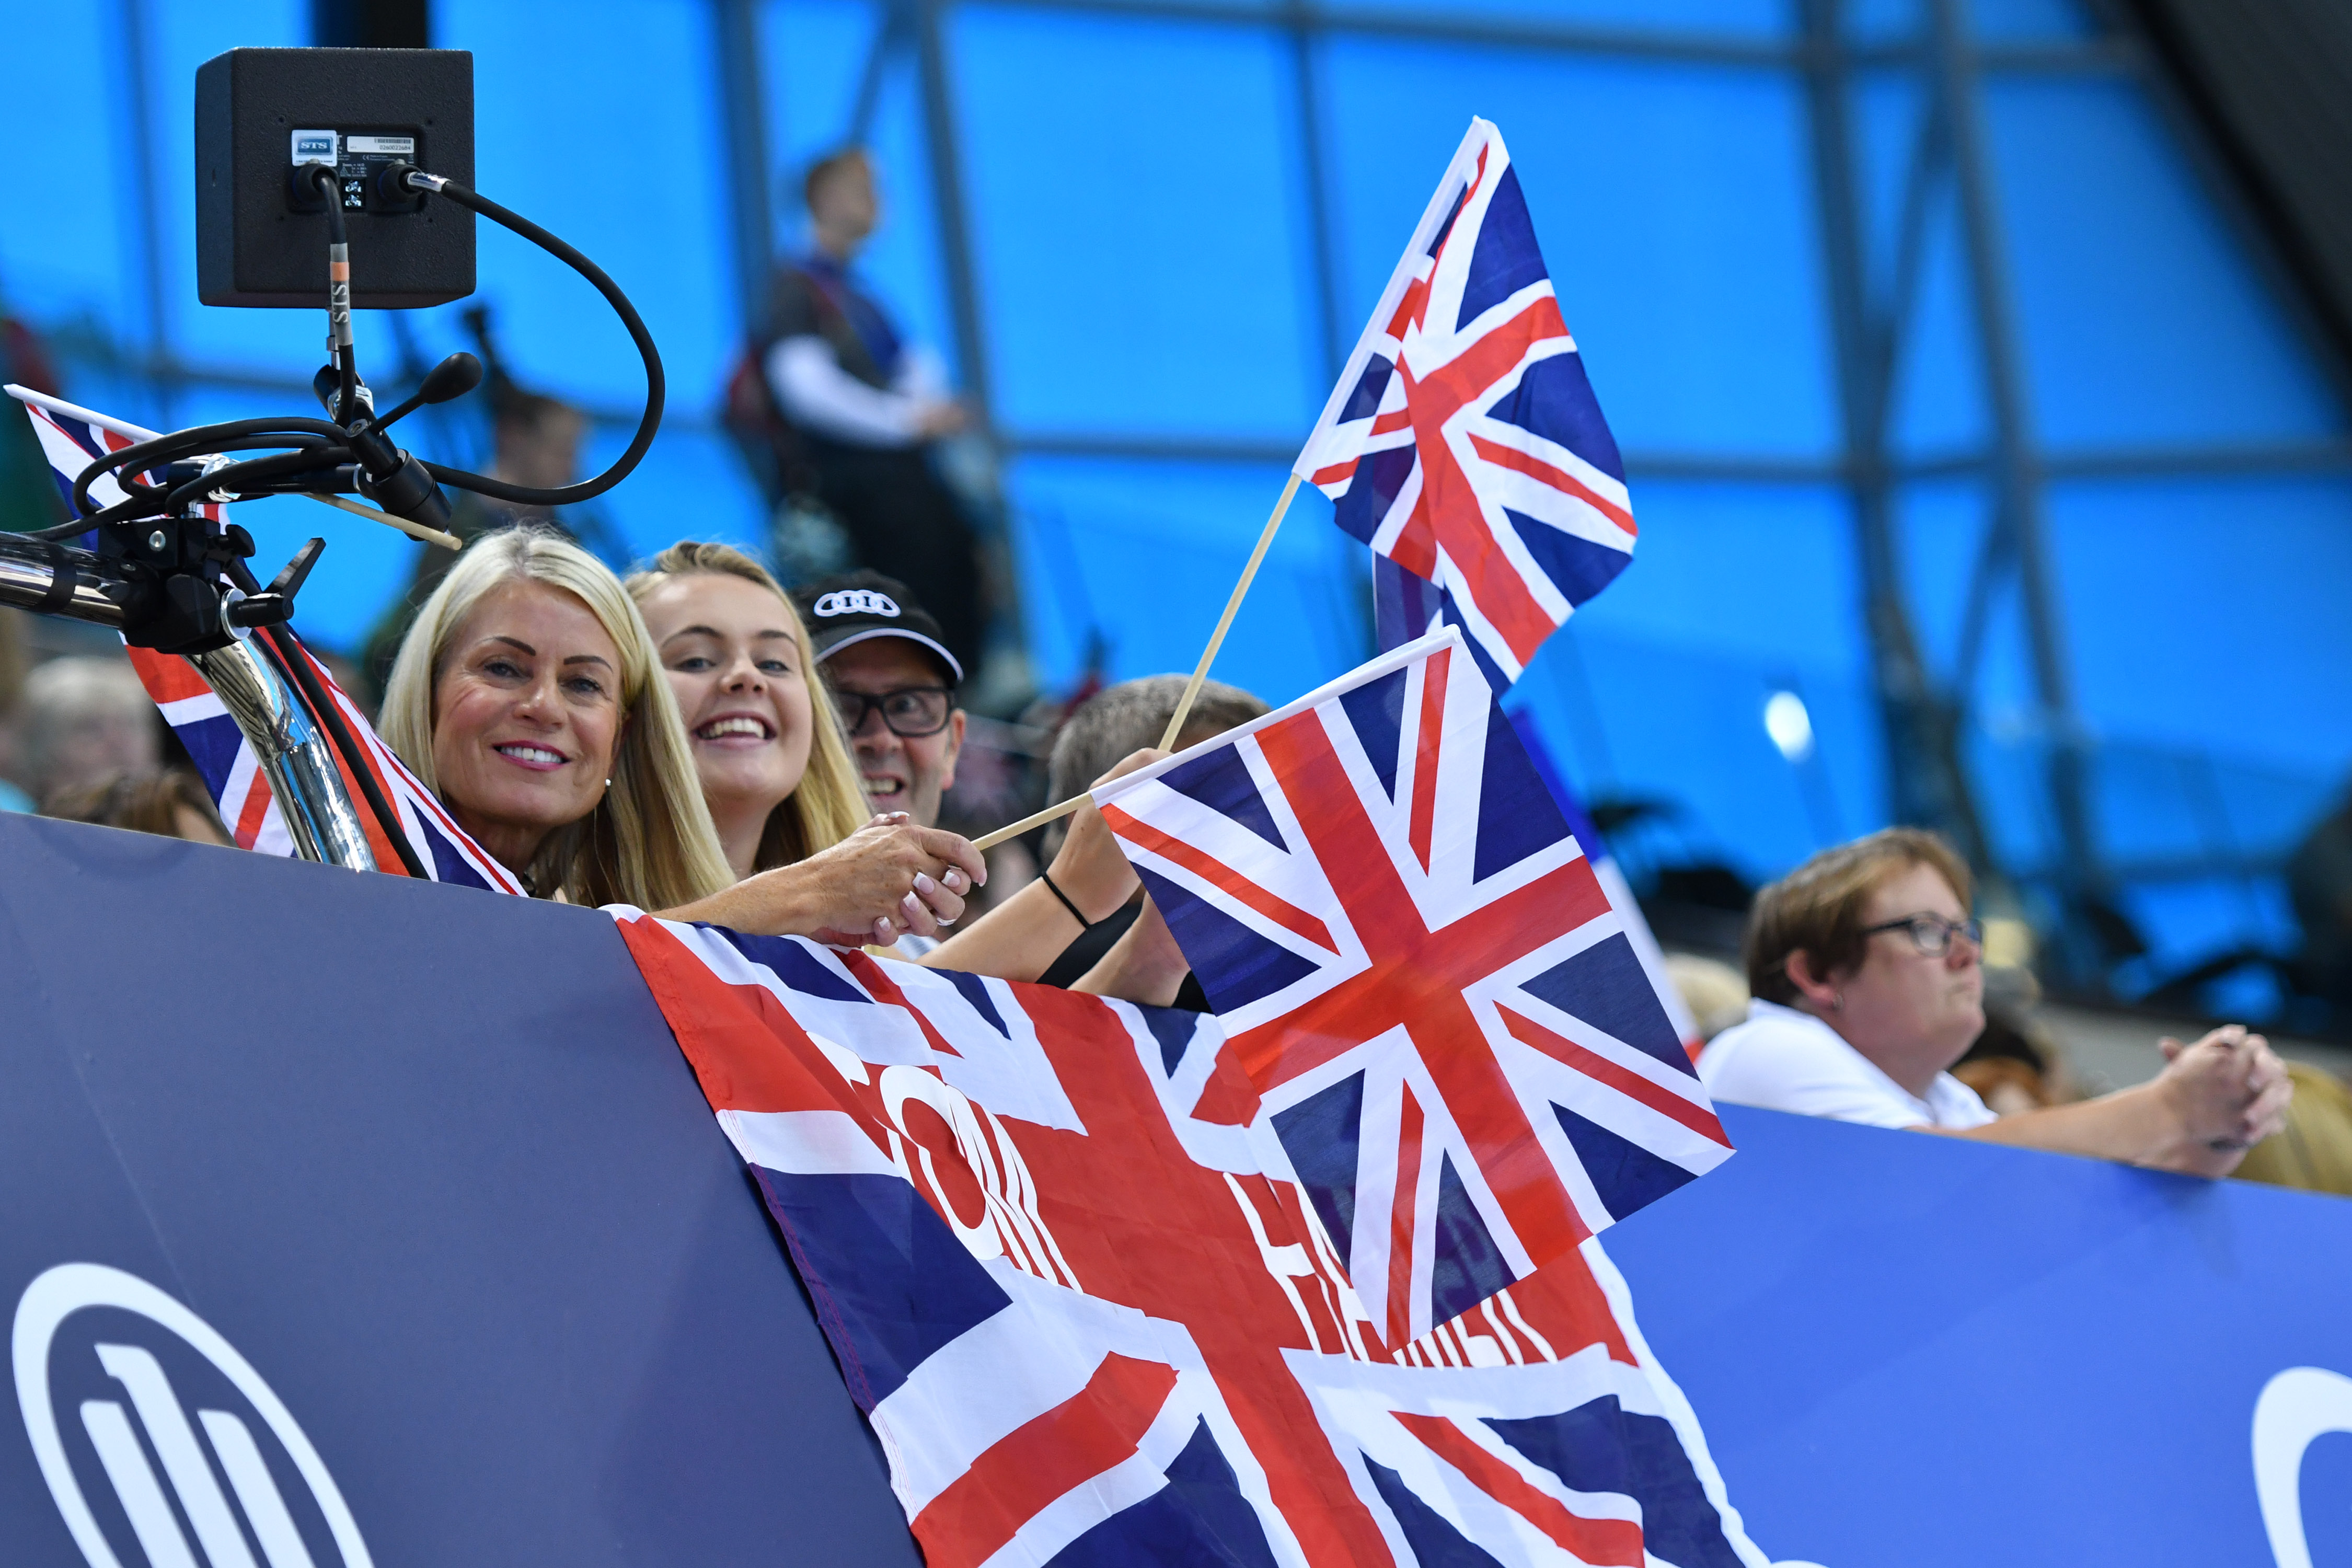 2019 London World Para Swimming Opening Ceremony